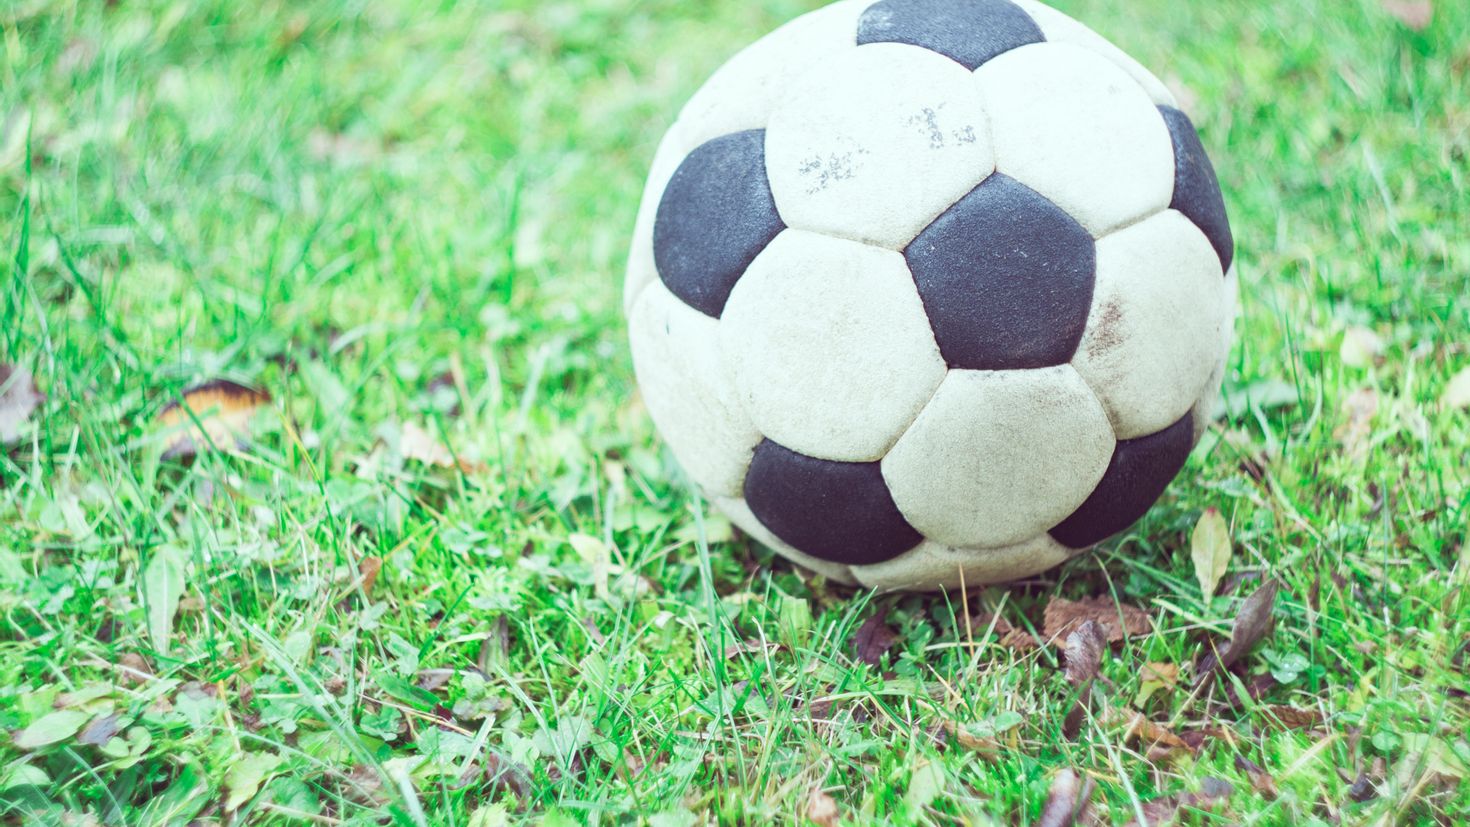 Голова мяч футбол. СОККЕР Болл. Футбольный мяч. Старый футбольный мяч. Футбольный мяч на траве.